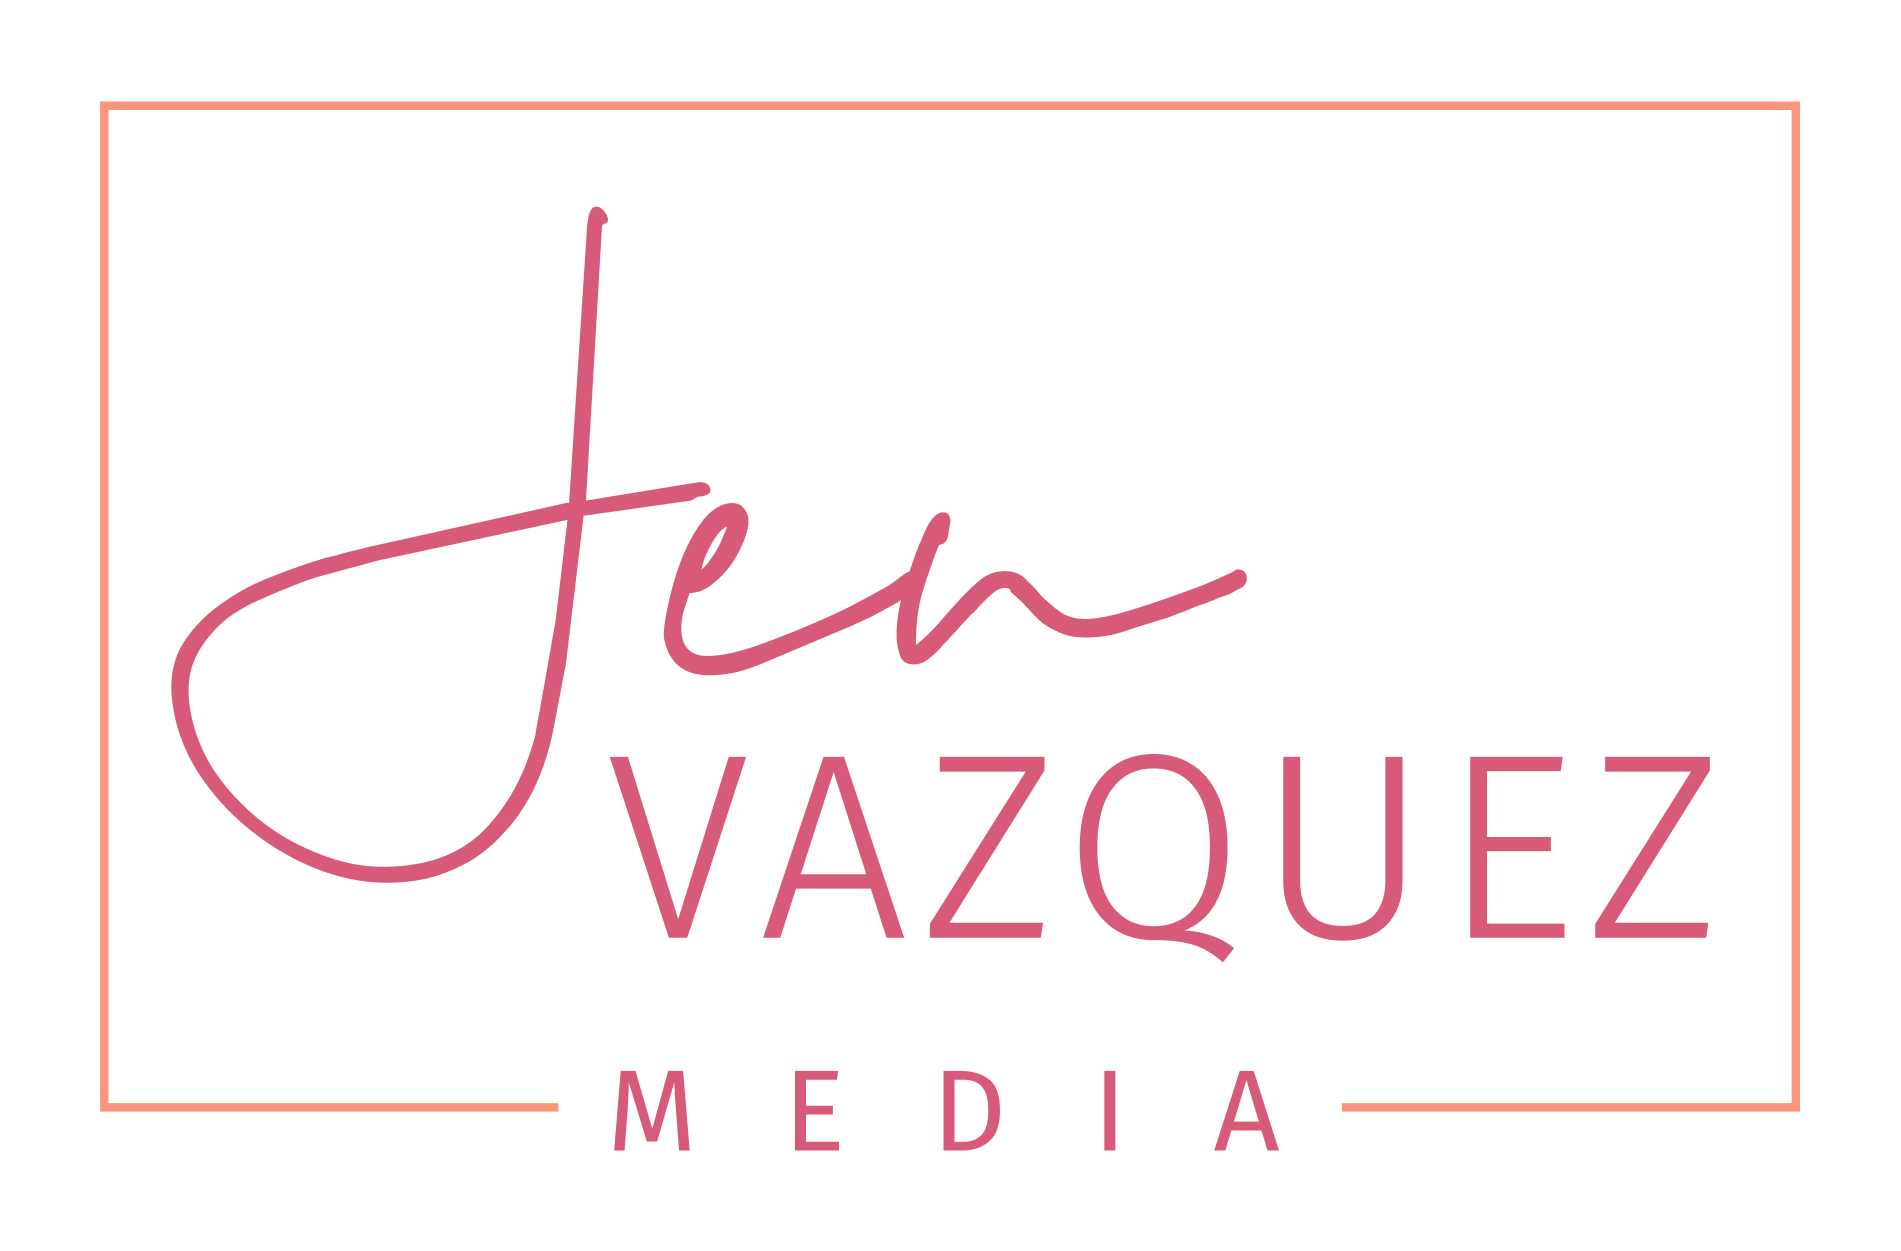 Jen Vazquez Media | Pinterest Management + Strategist